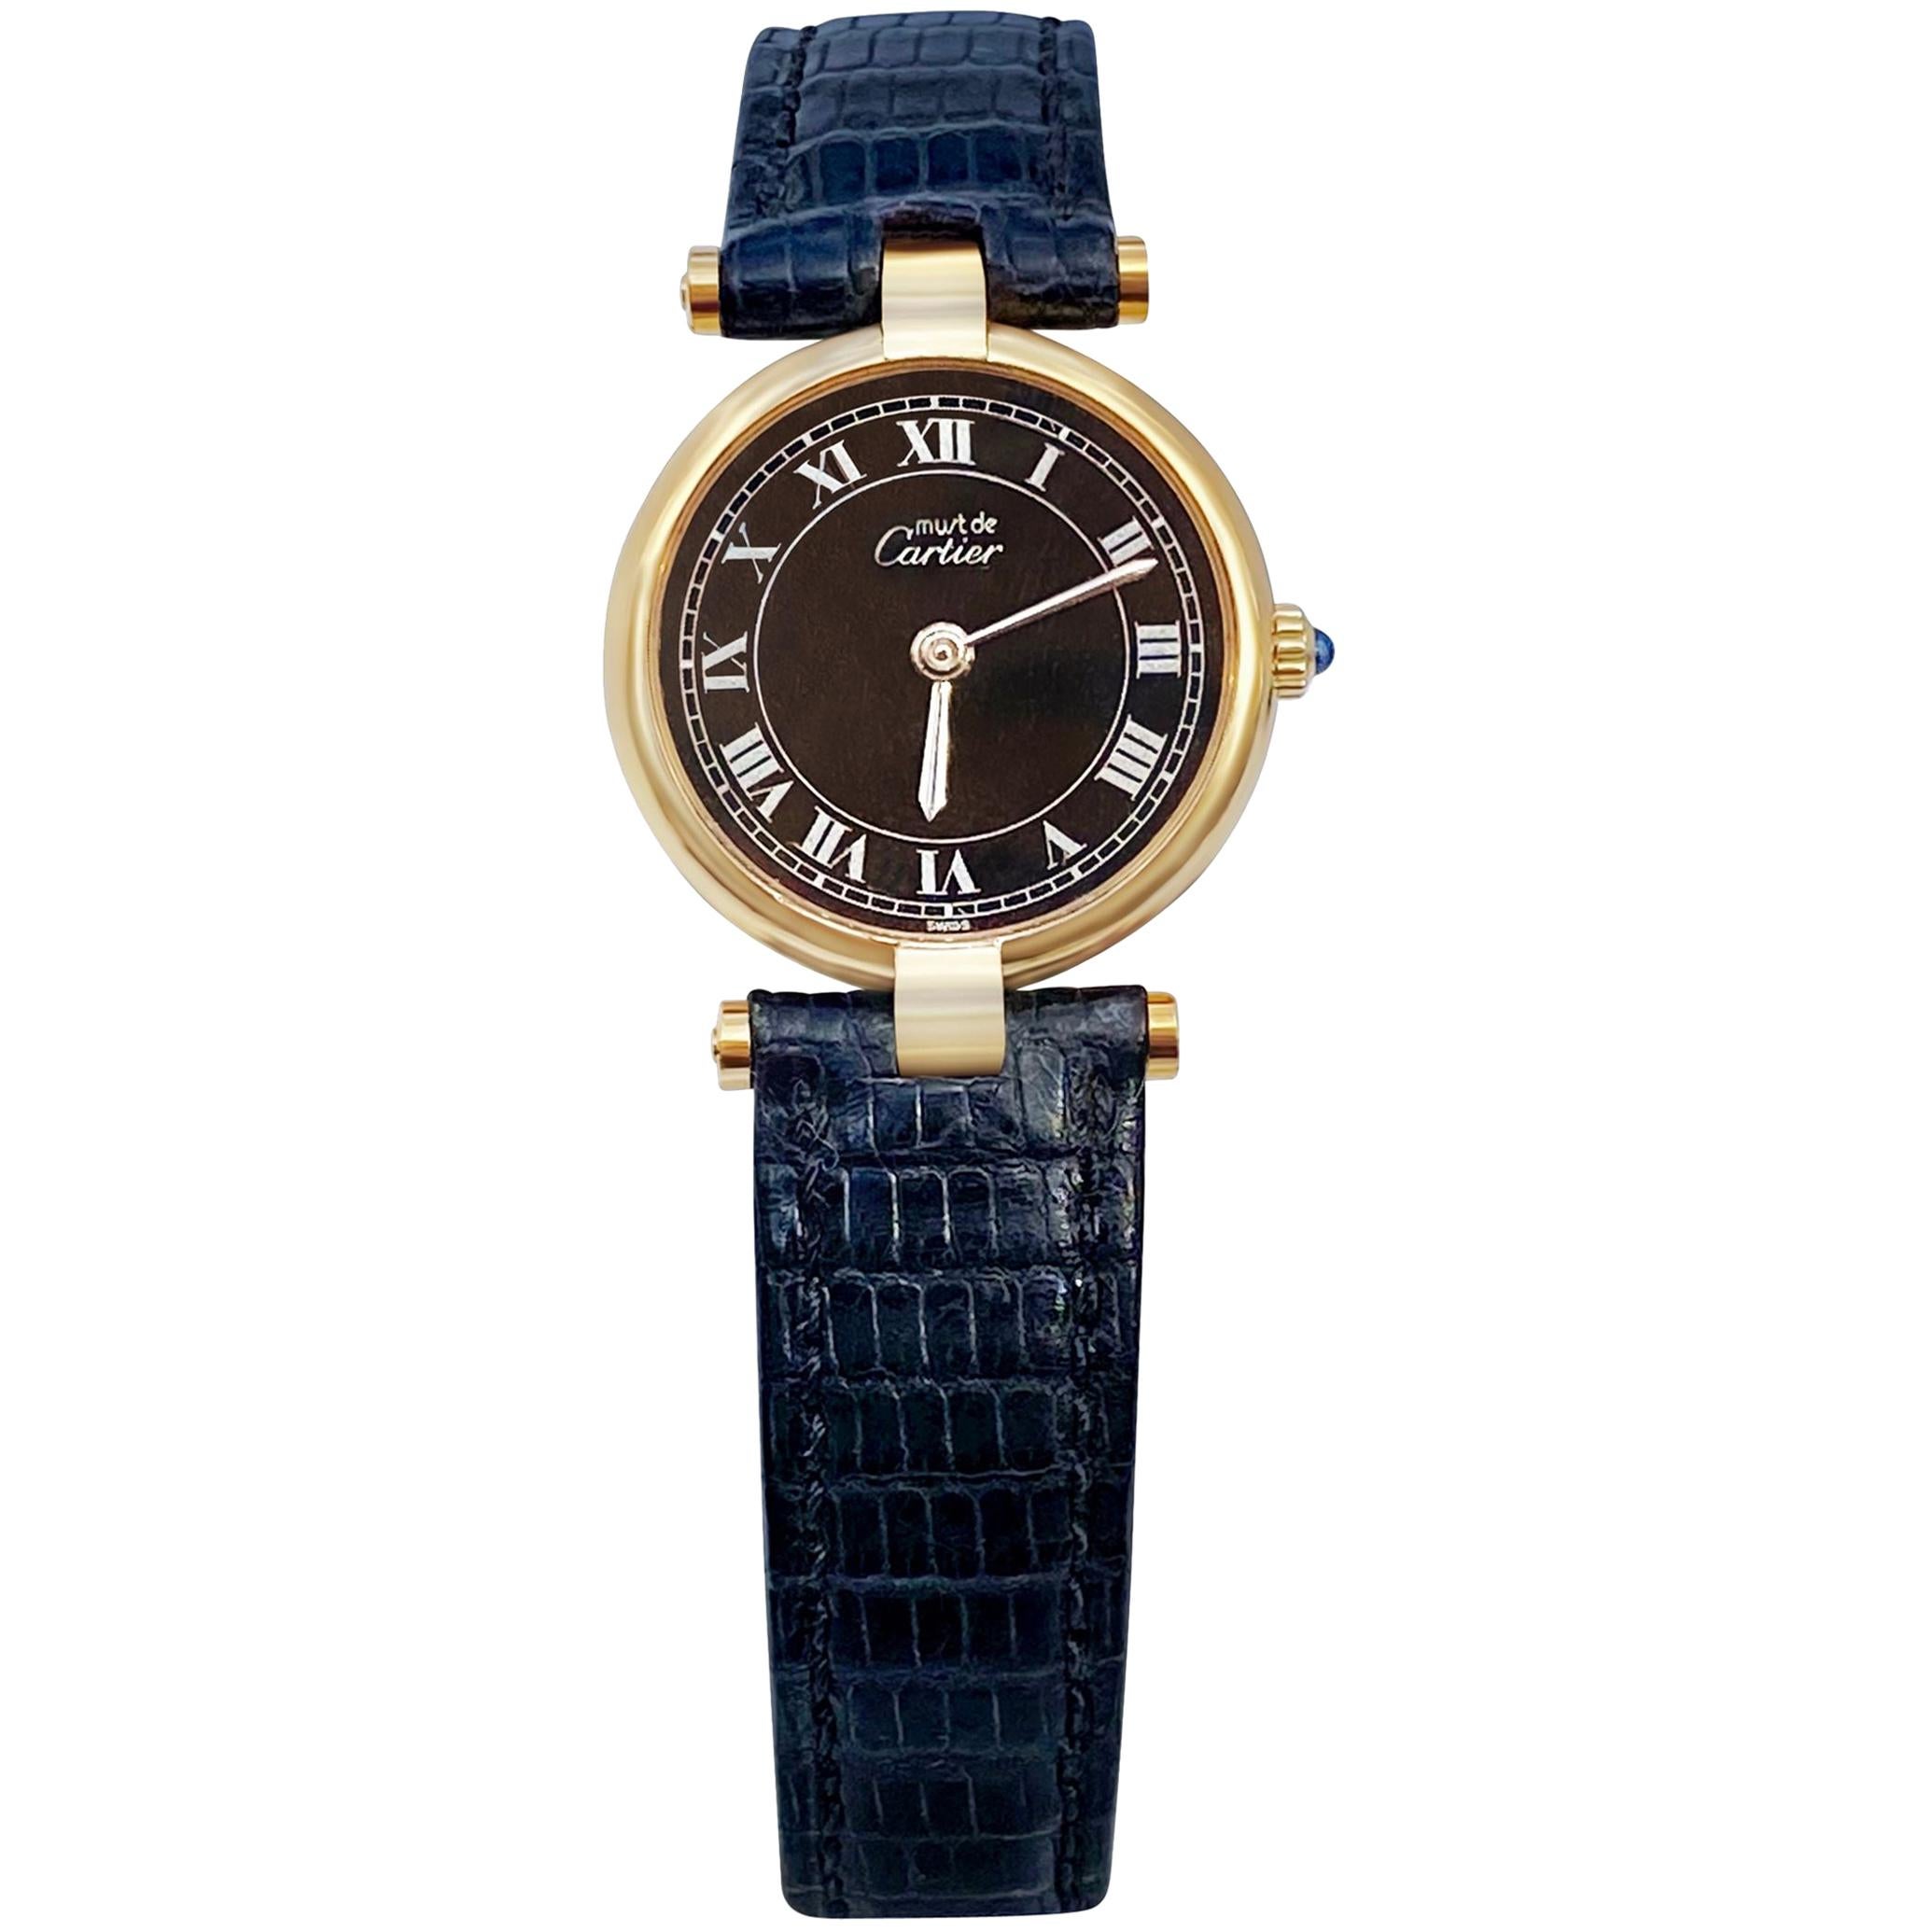 Cartier "Must De" Argent Vermeil Women's Watch